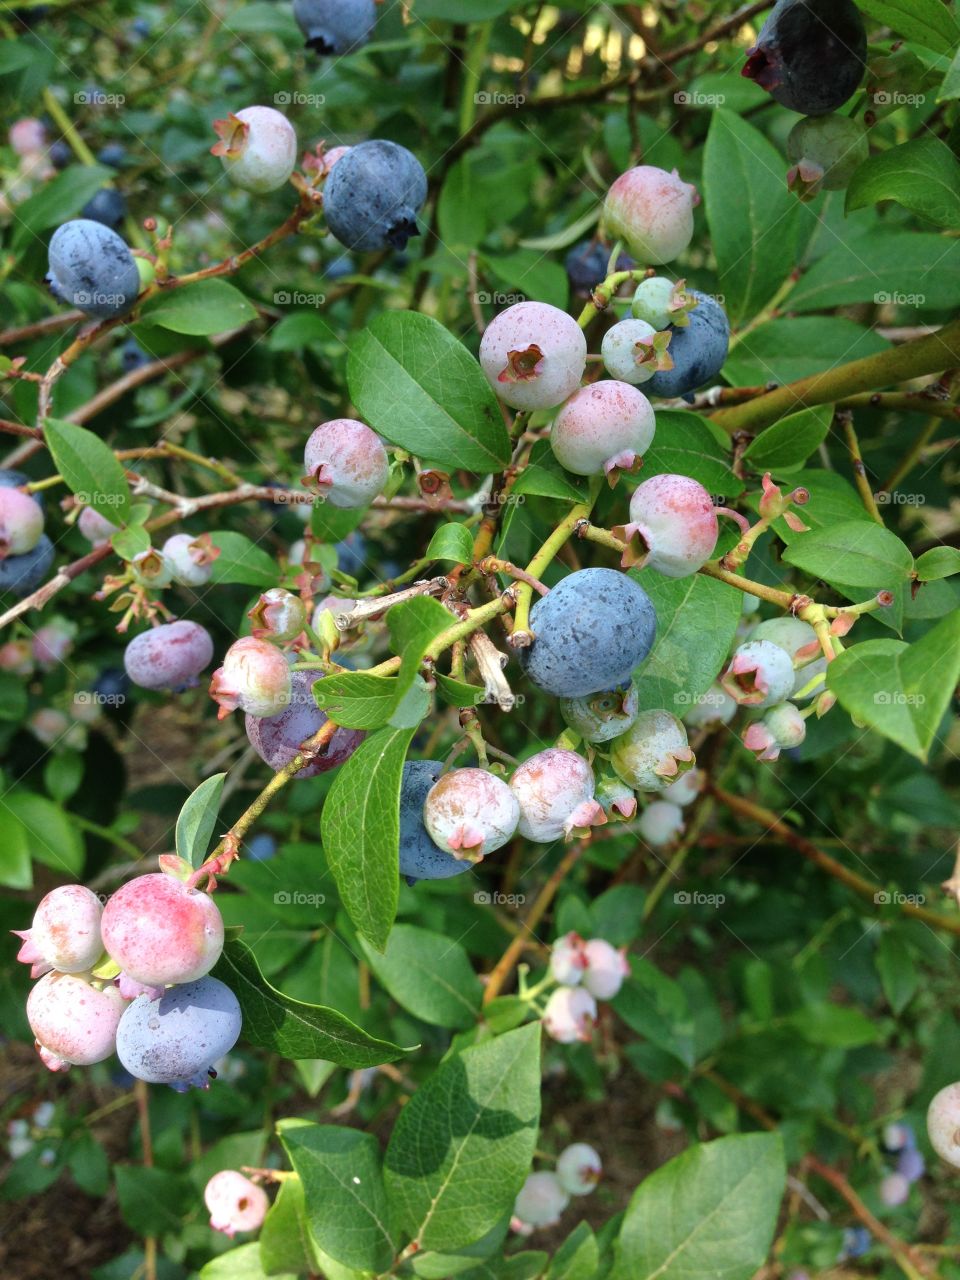 Blueberries. Taken while puck in blueberries in western Michigan